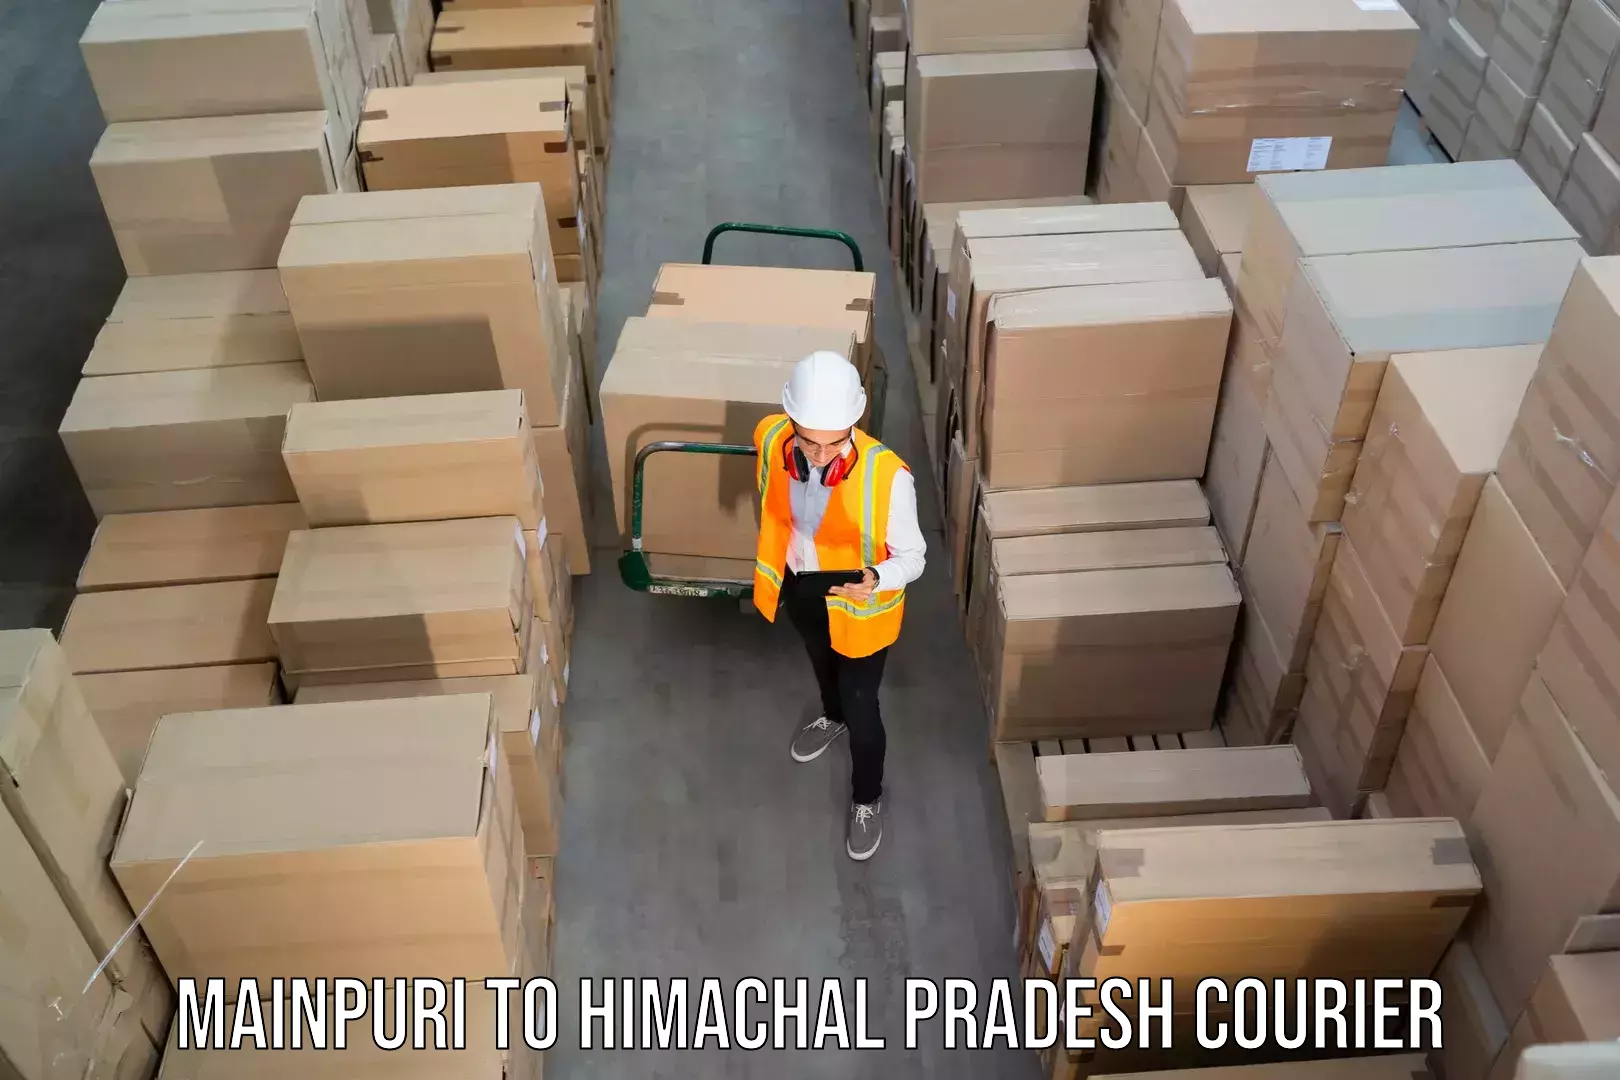 Package delivery network Mainpuri to Himachal Pradesh